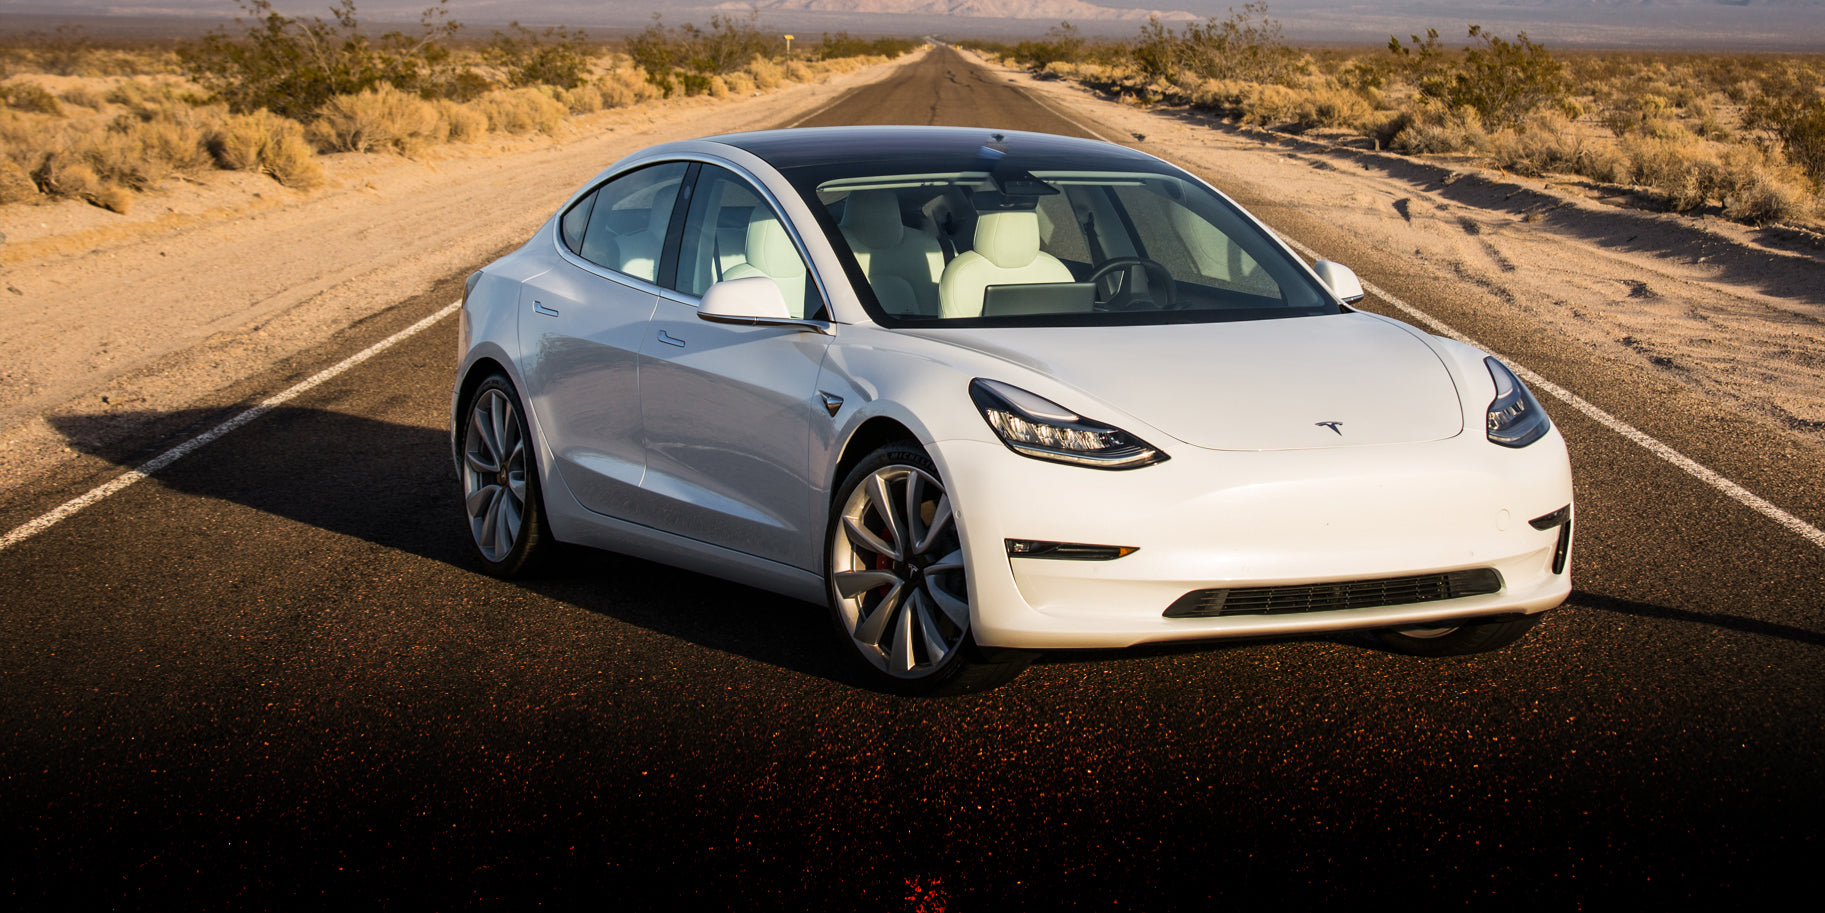 NSW Energy Minister Loves His New Tesla Model 3: ”Best Car I’ve Ever Driven”